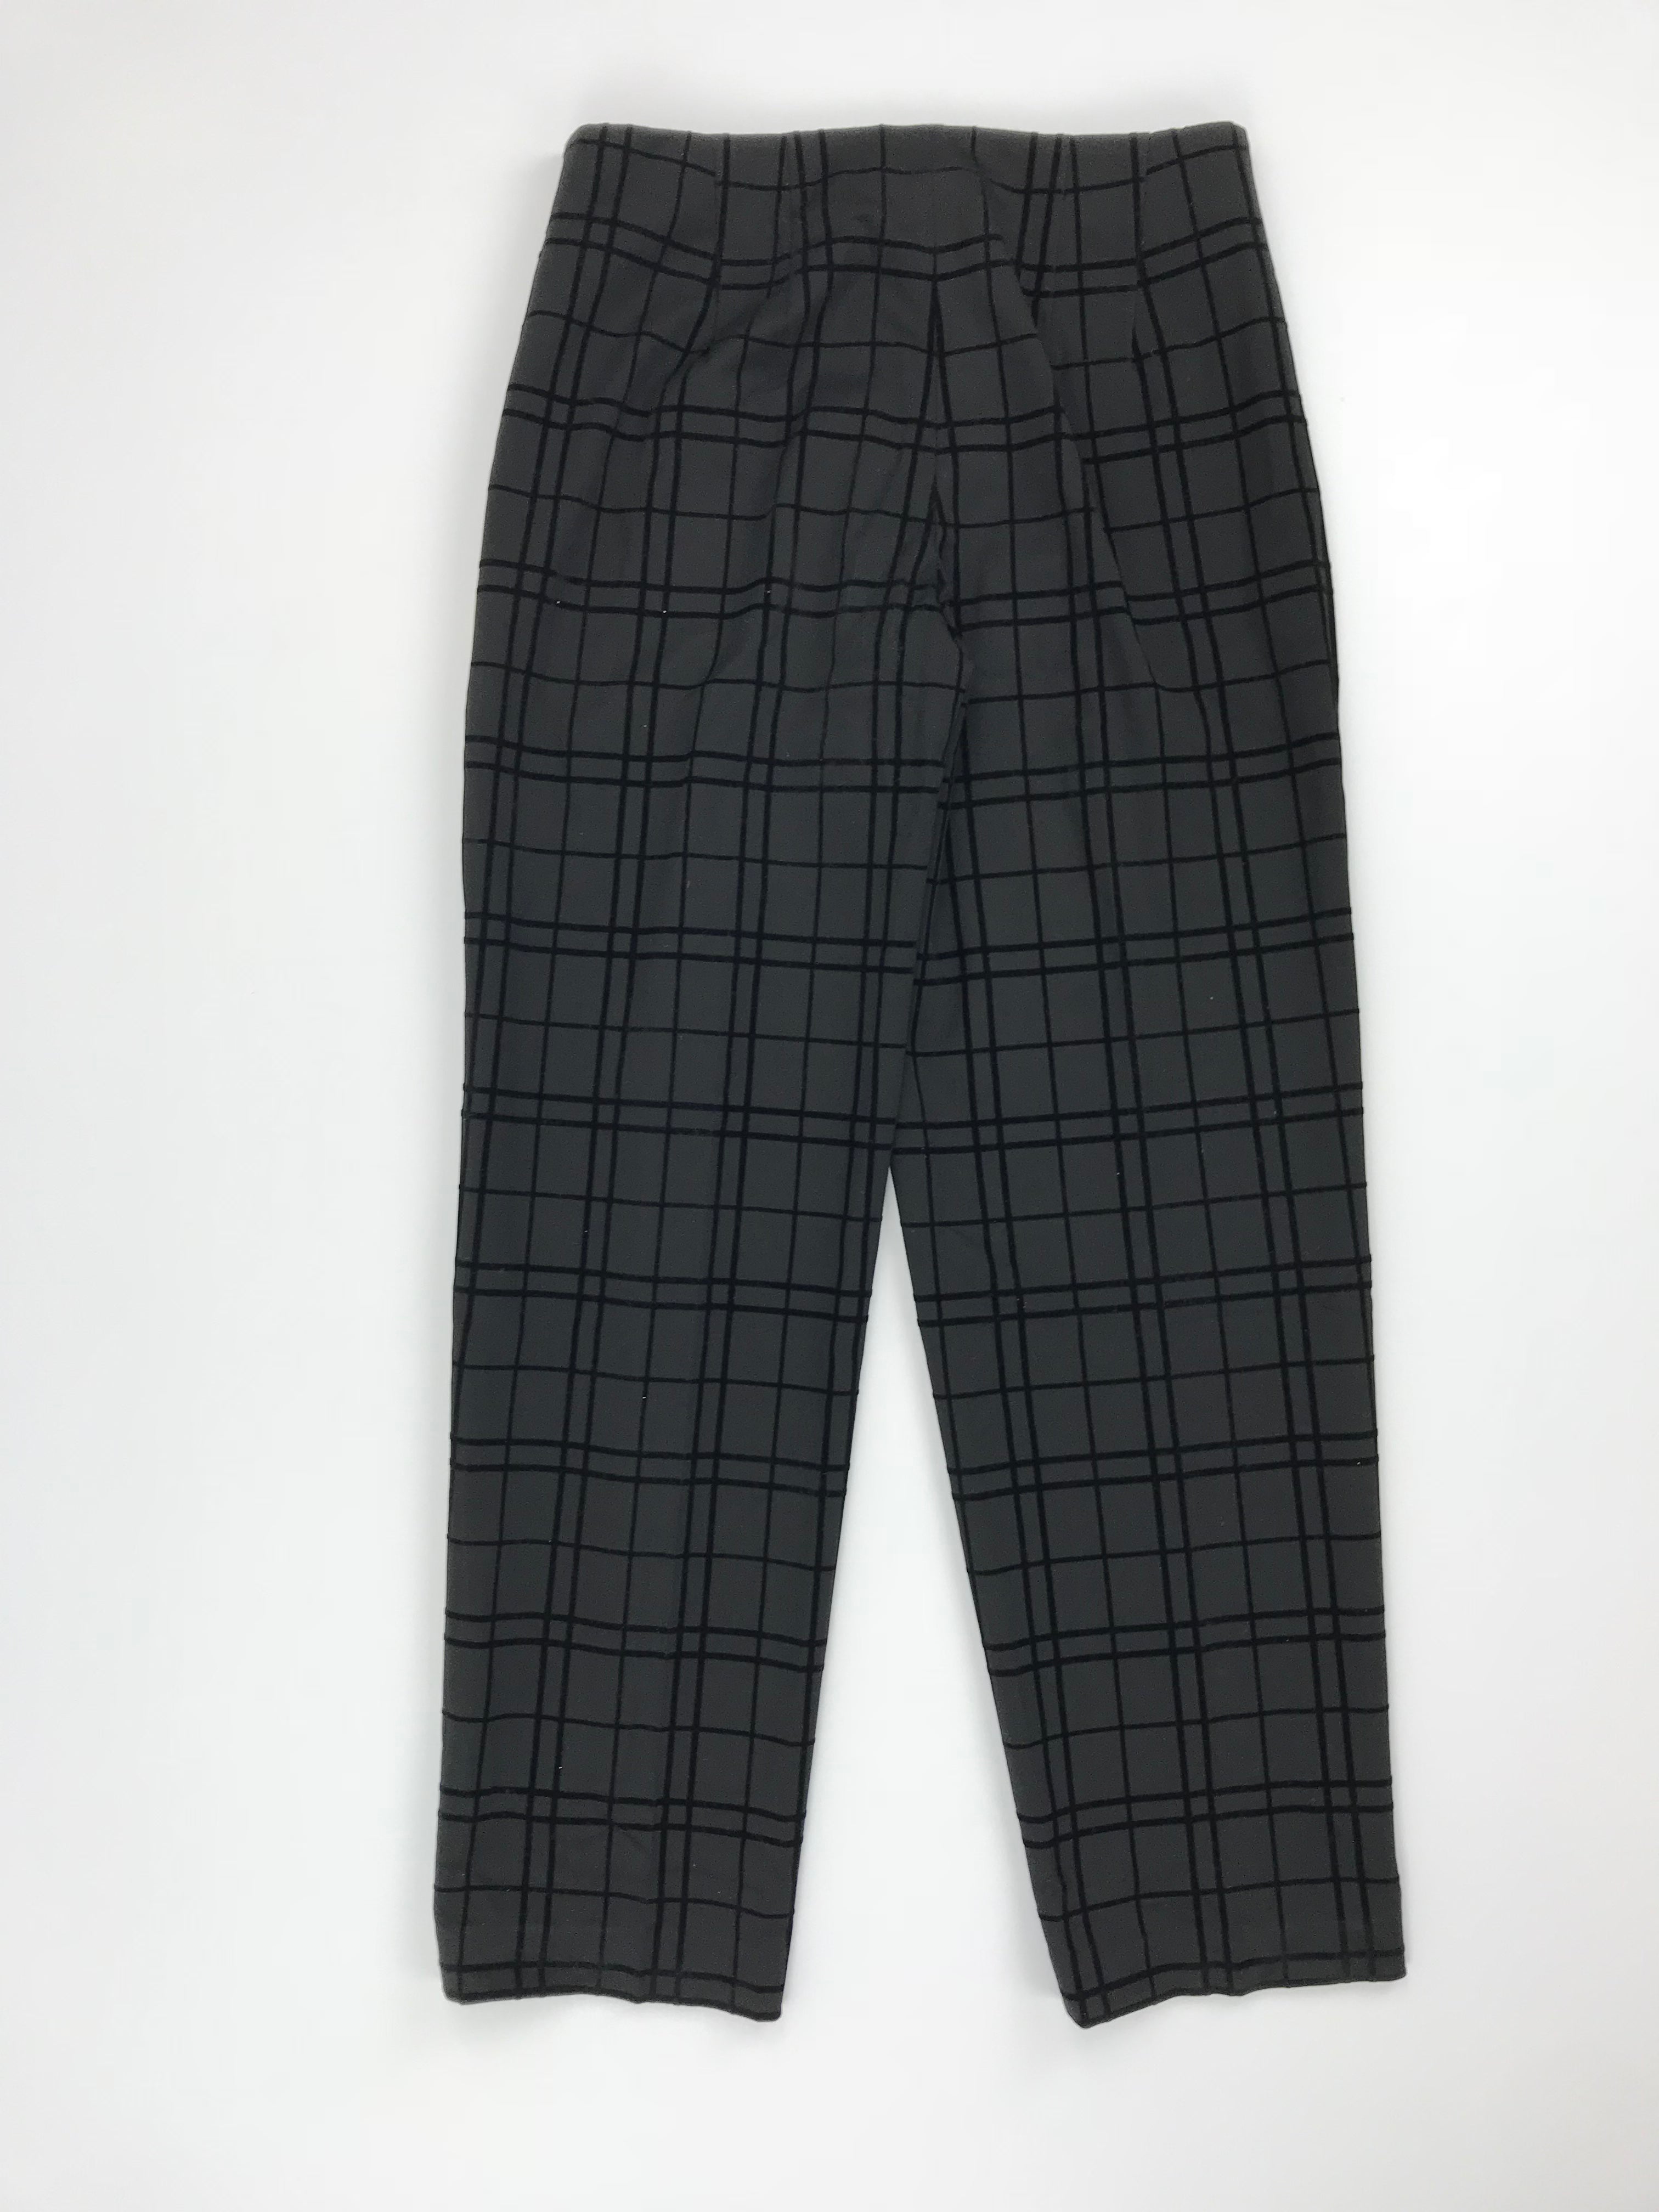 black and grey plaid pants